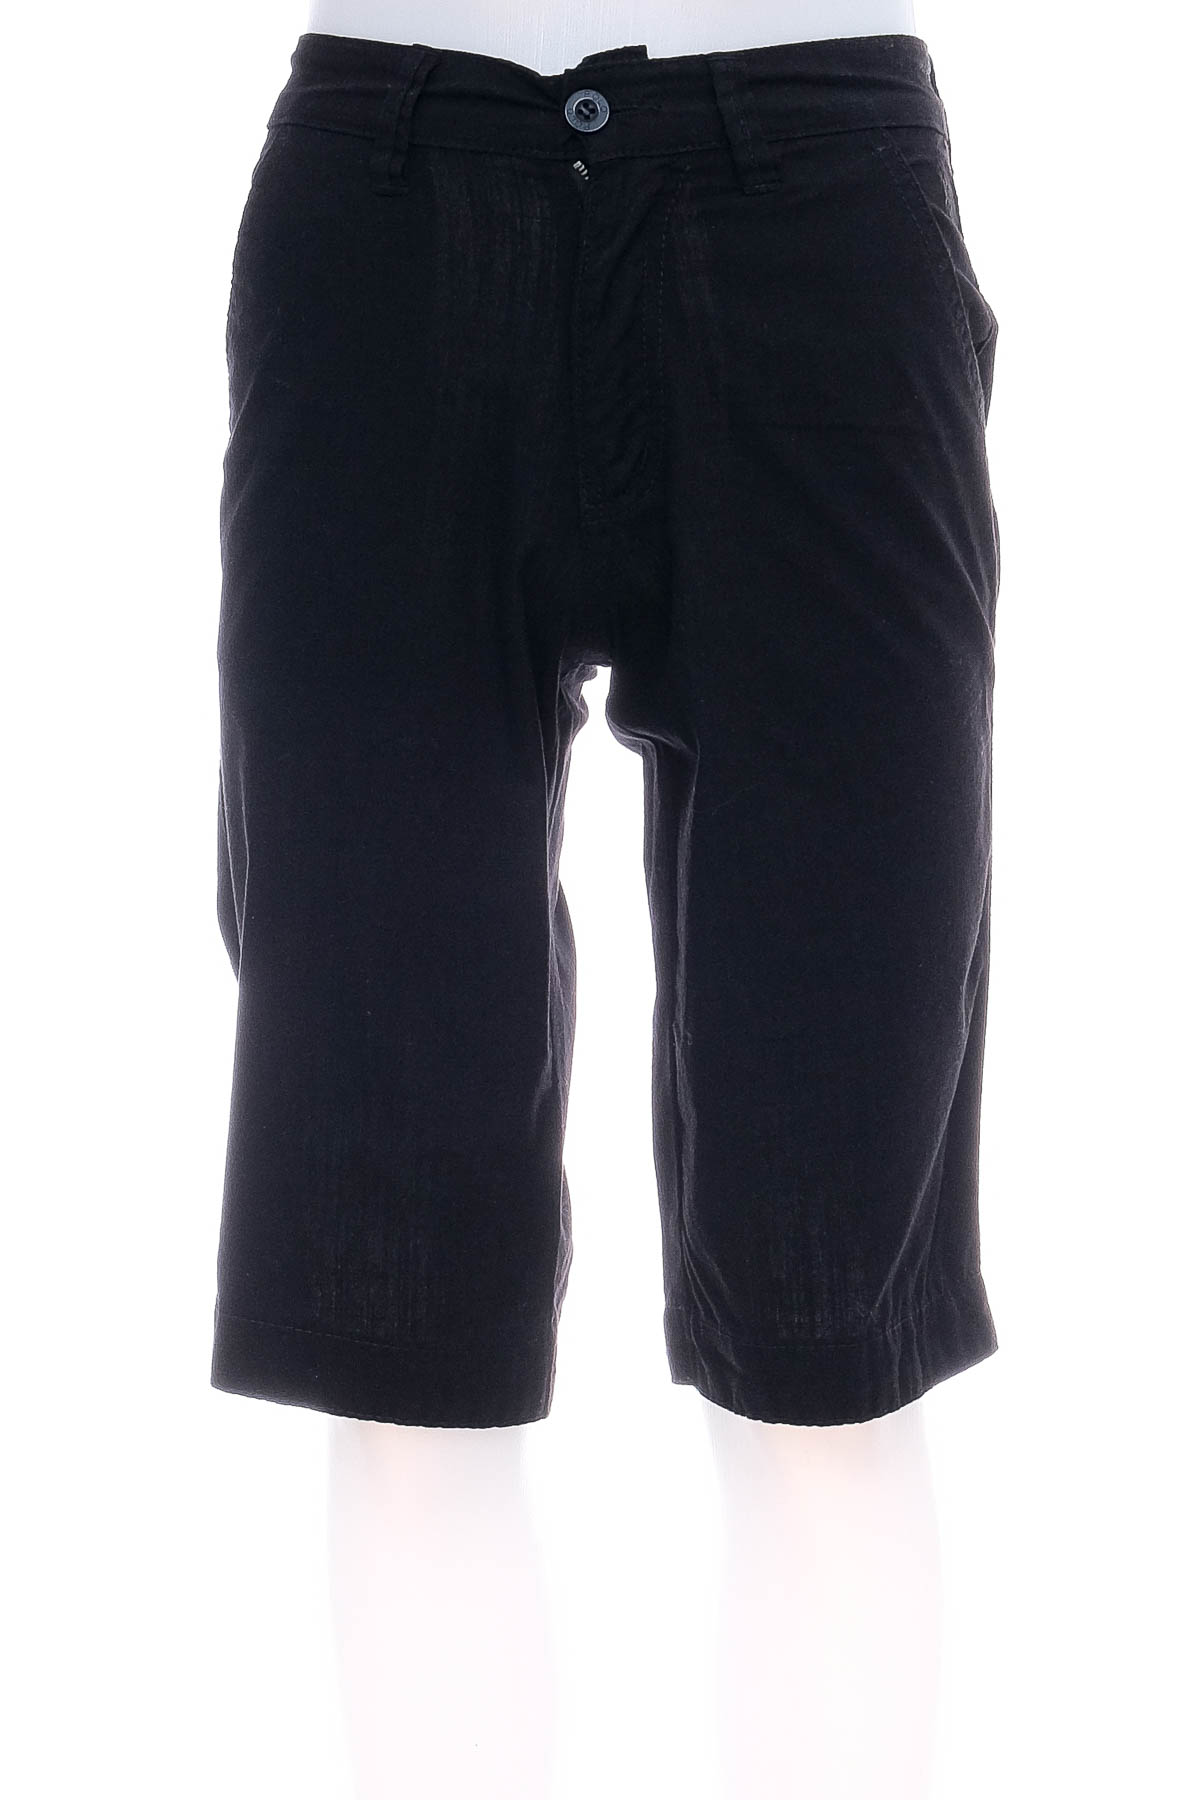 Men's shorts - POLO RALPH LAUREN - 0